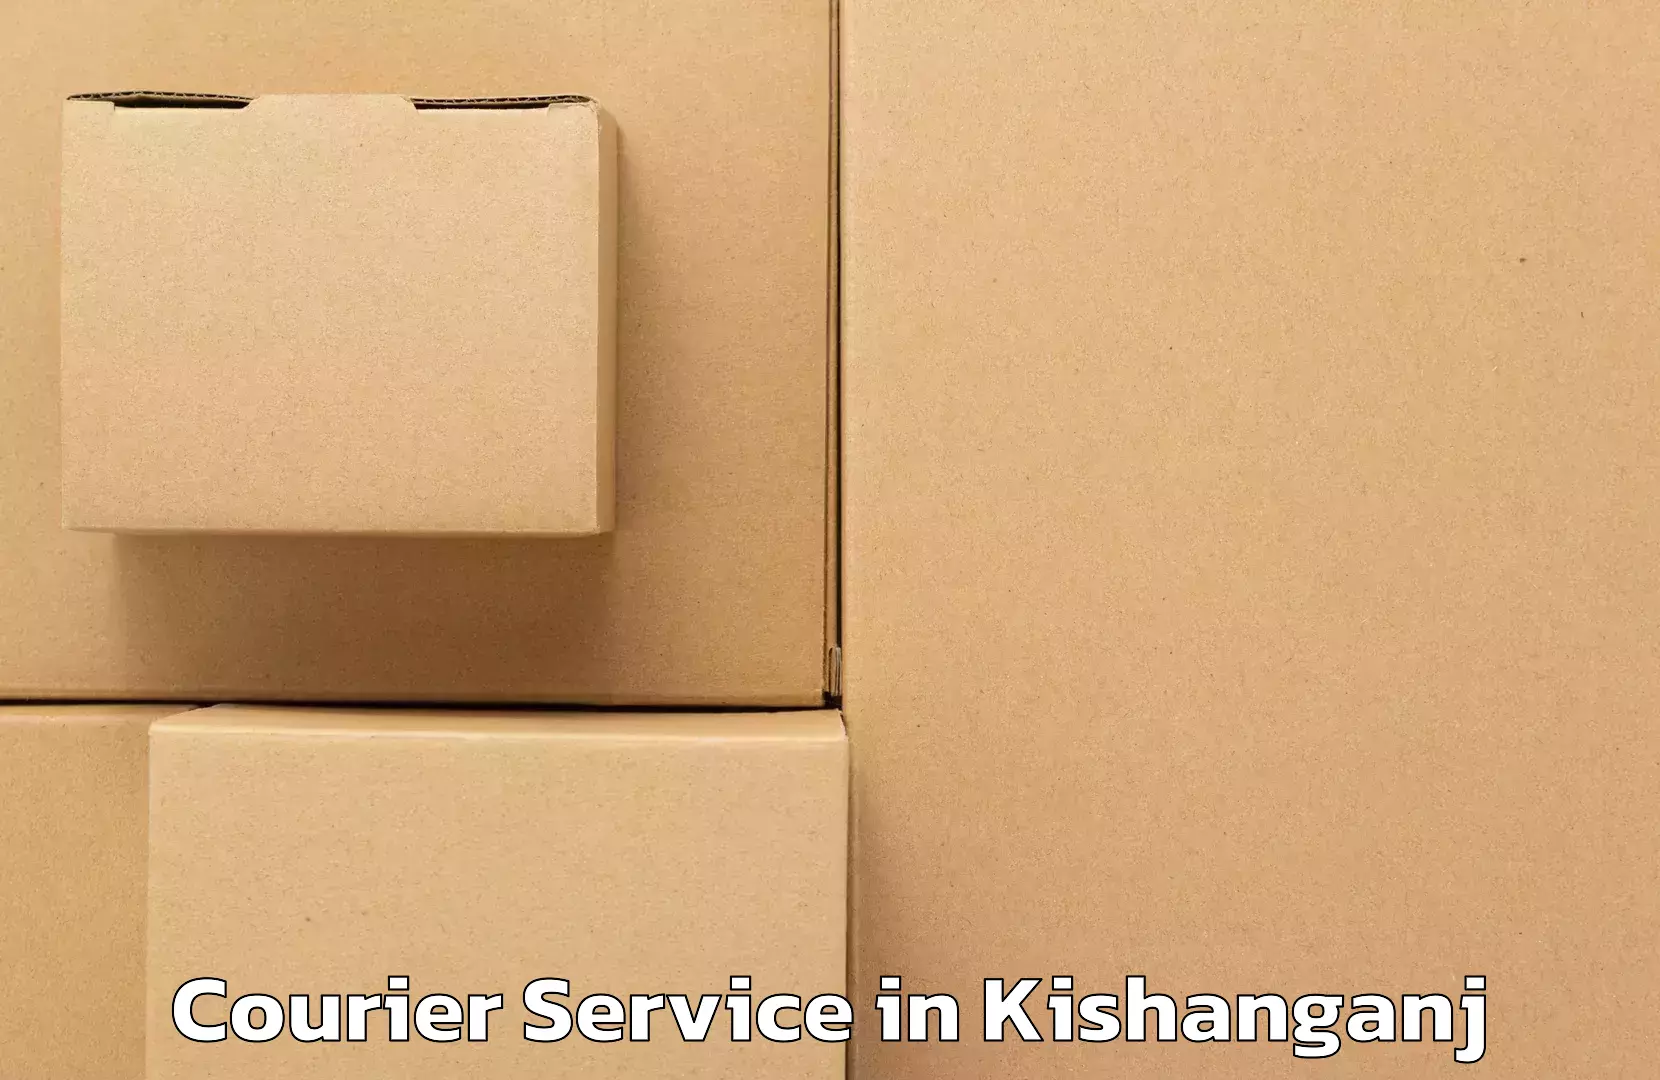 Smart logistics strategies in Kishanganj